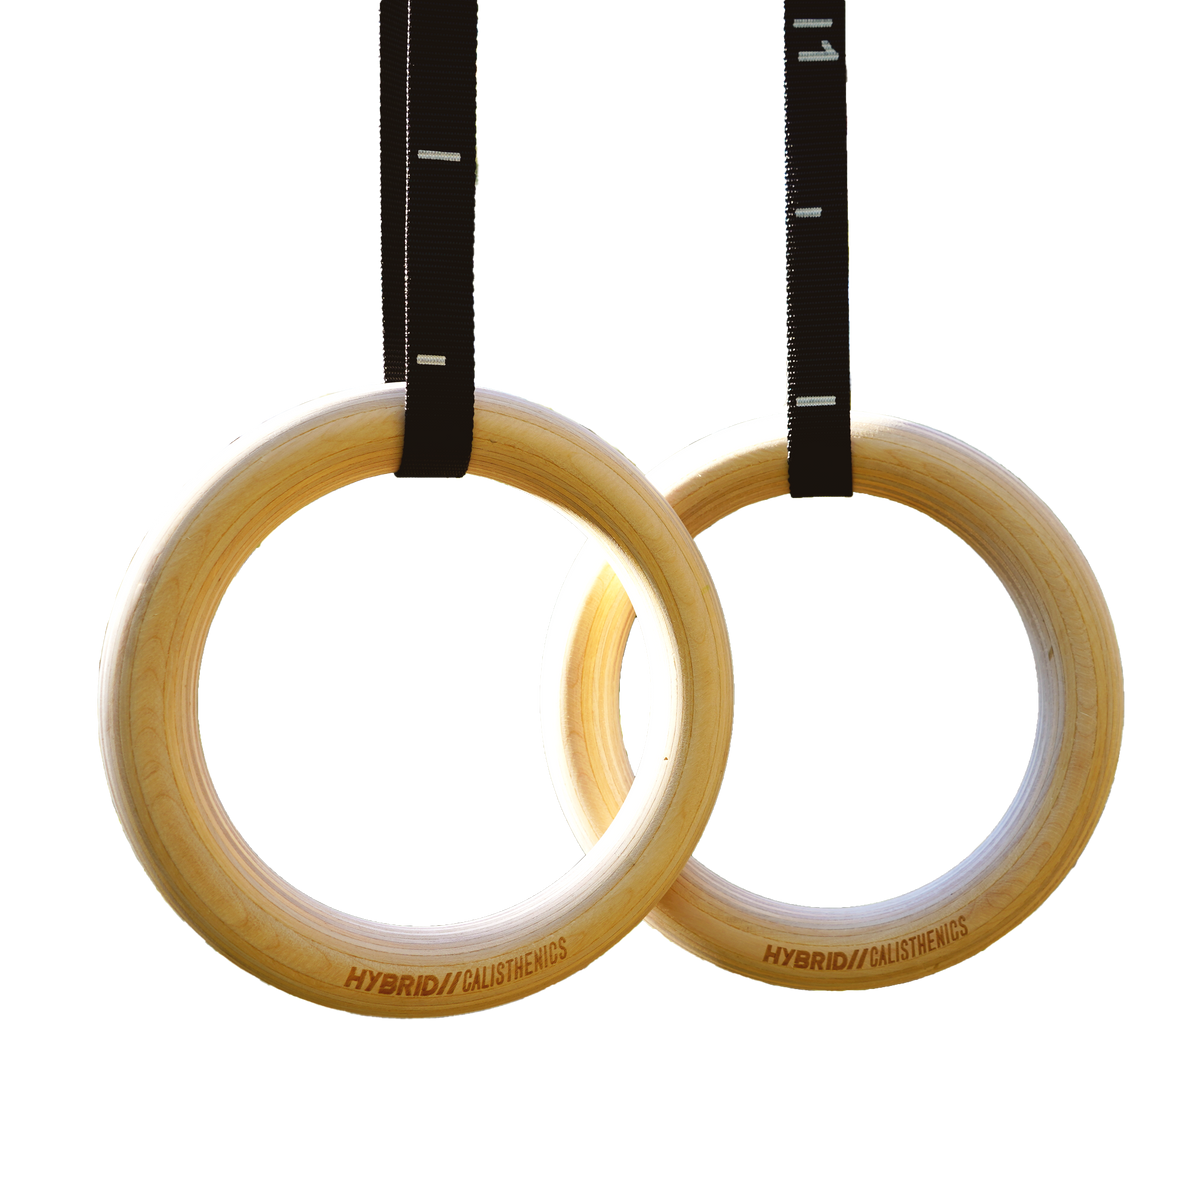 CREA Birch Gymnastics Ring, Professional Adjustable Fitness Ring